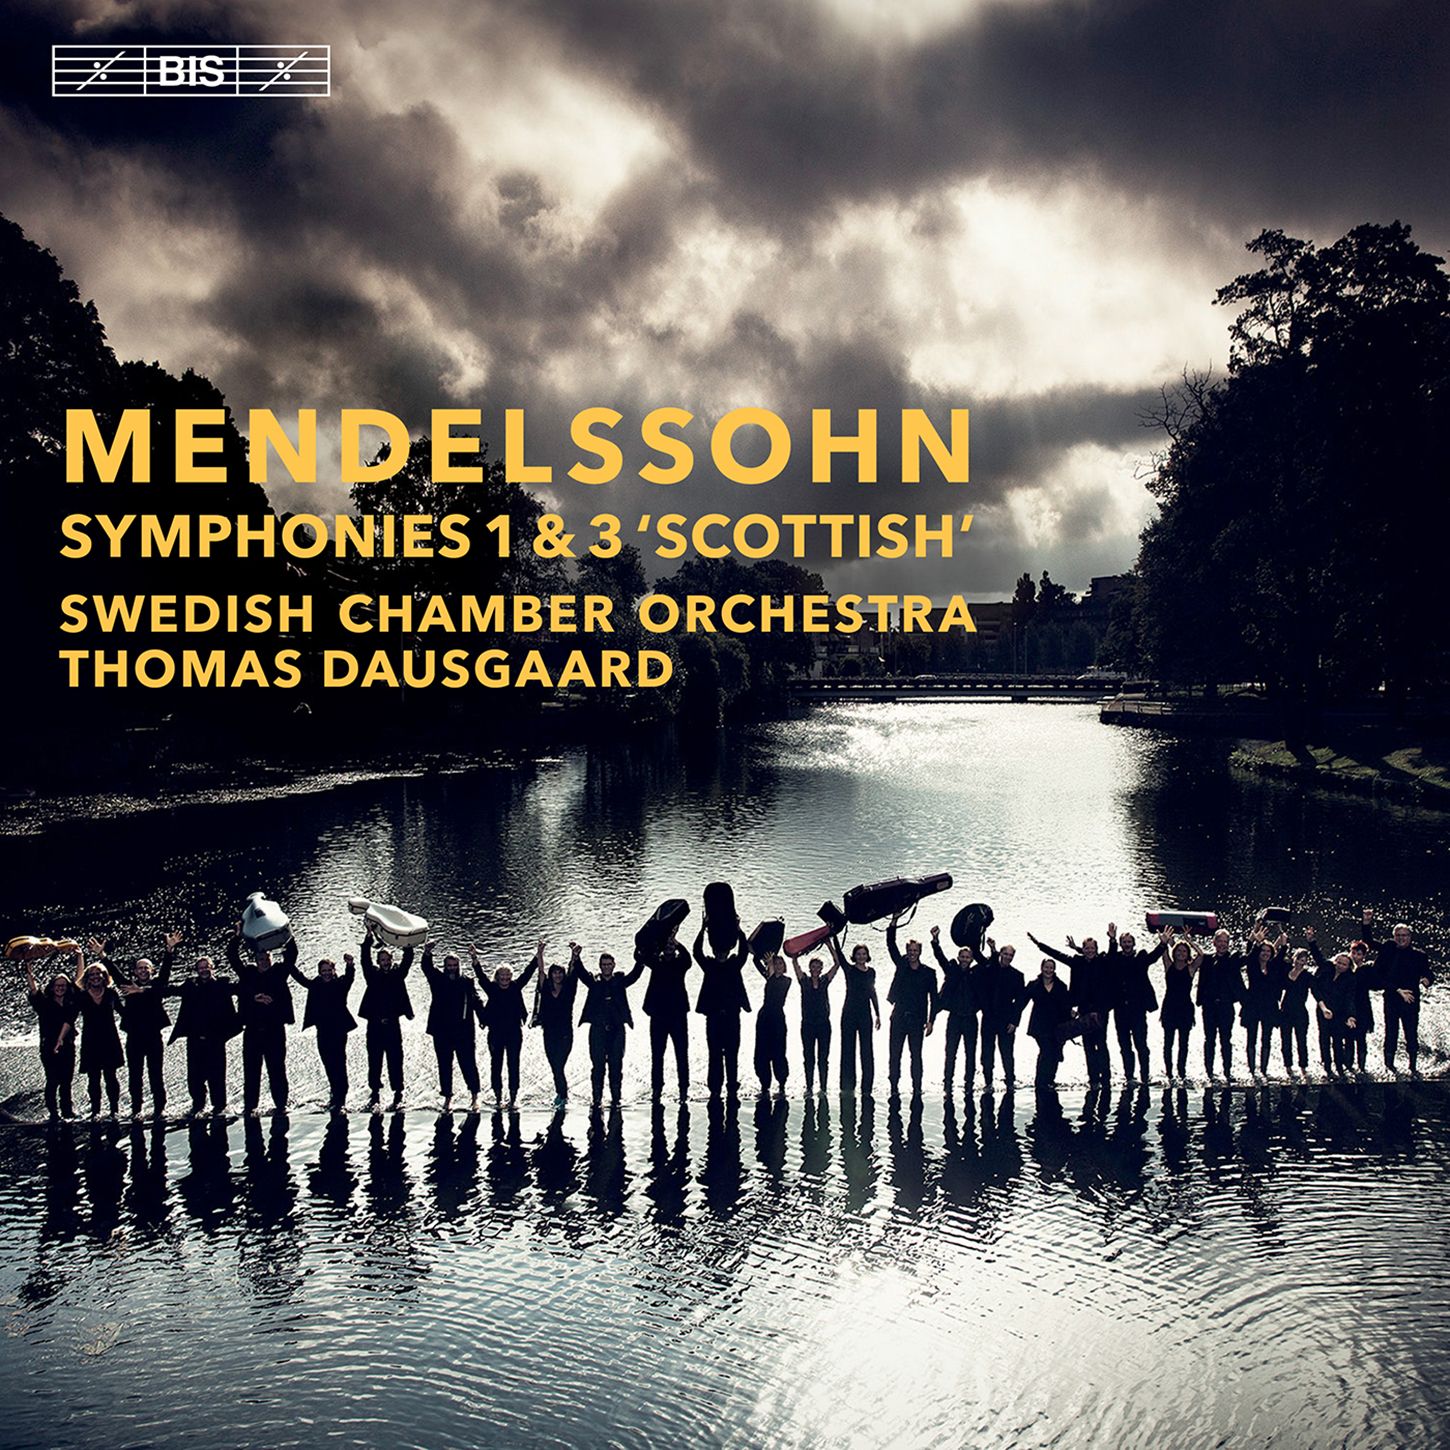 Mendelssohn Symphonies from Sweden